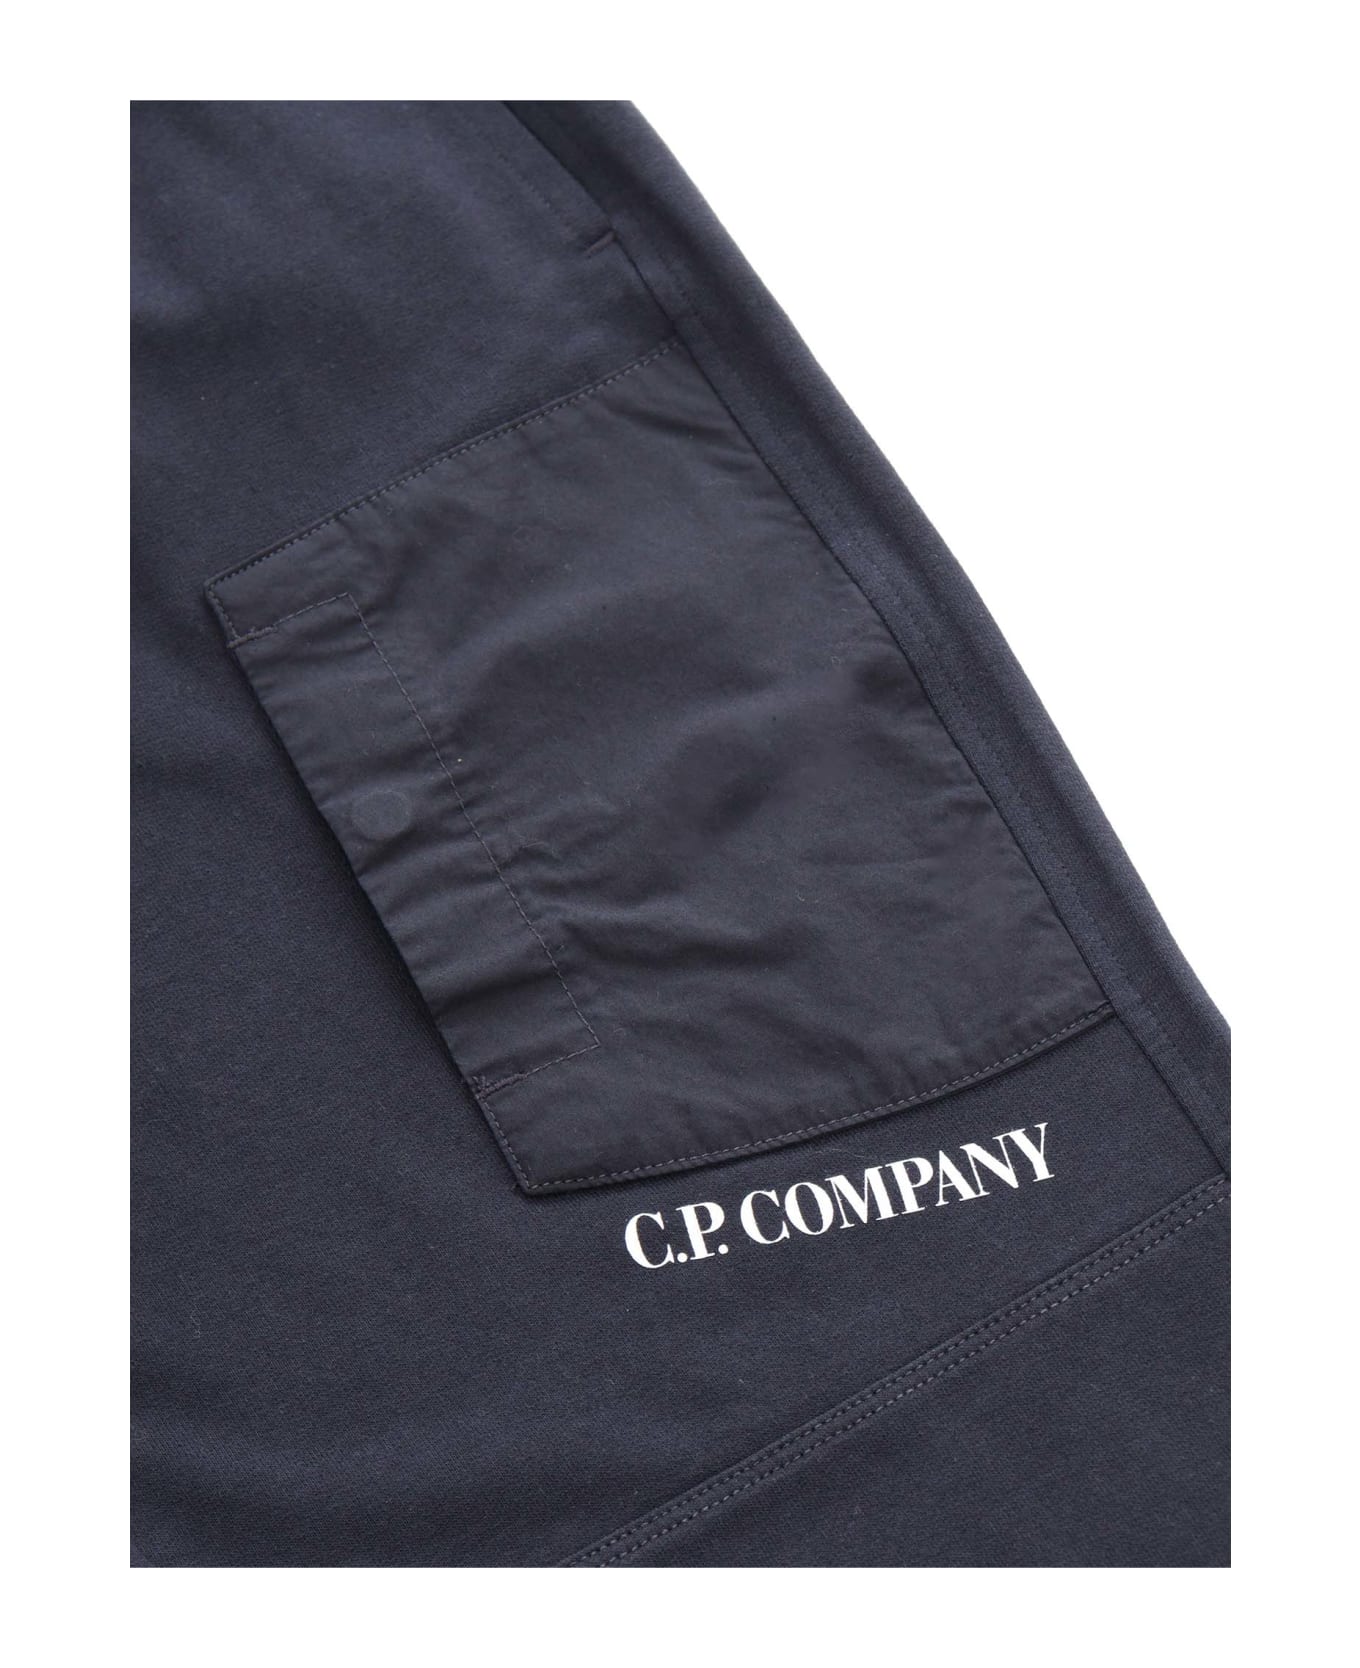 C.P. Company Undersixteen Blue Joggers Pants - BLUE ボトムス